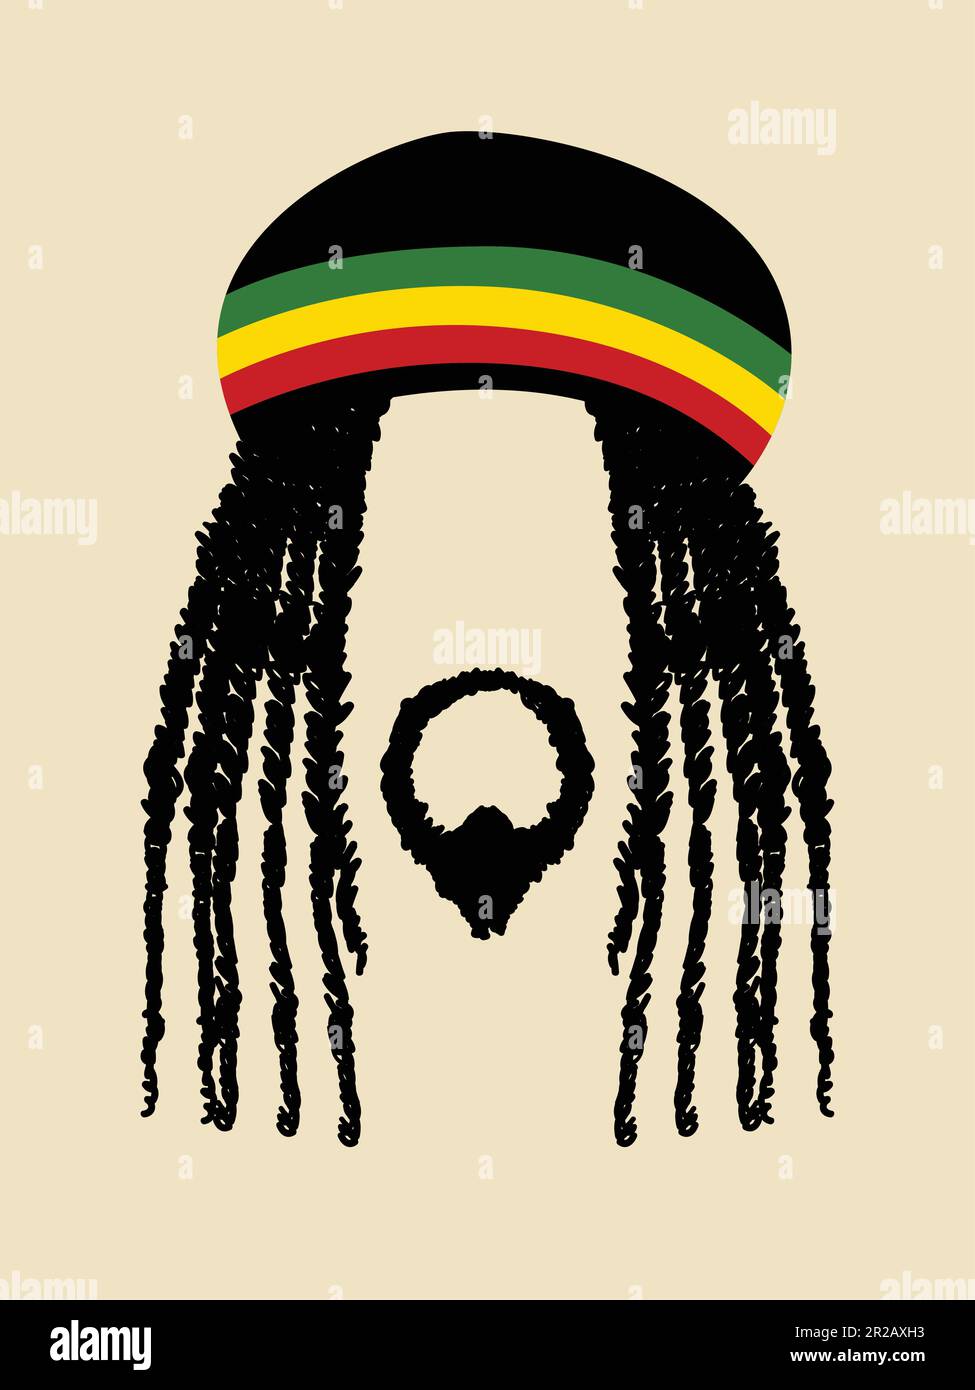 Gesichts-Symbol eines Mannes mit Dreadlocks Frisur. Rasta, rastafarian, jamaika, Reggae-Thema Stock Vektor